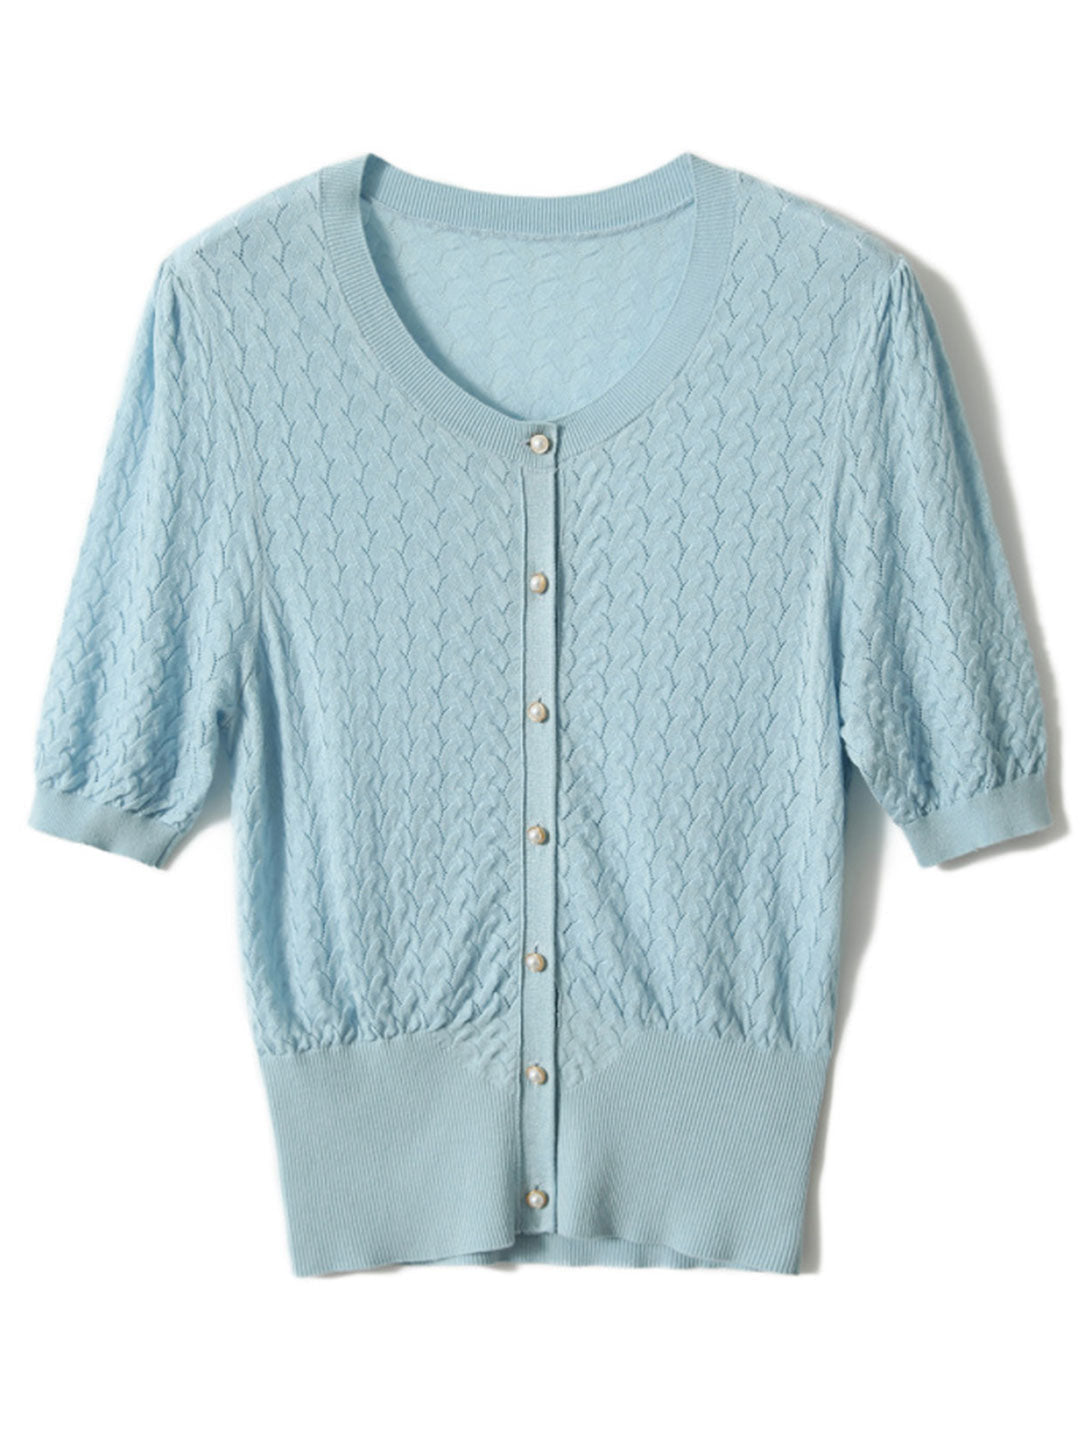 Brianna Retro Knitted Round Neck Sweater Cardigan-Blue